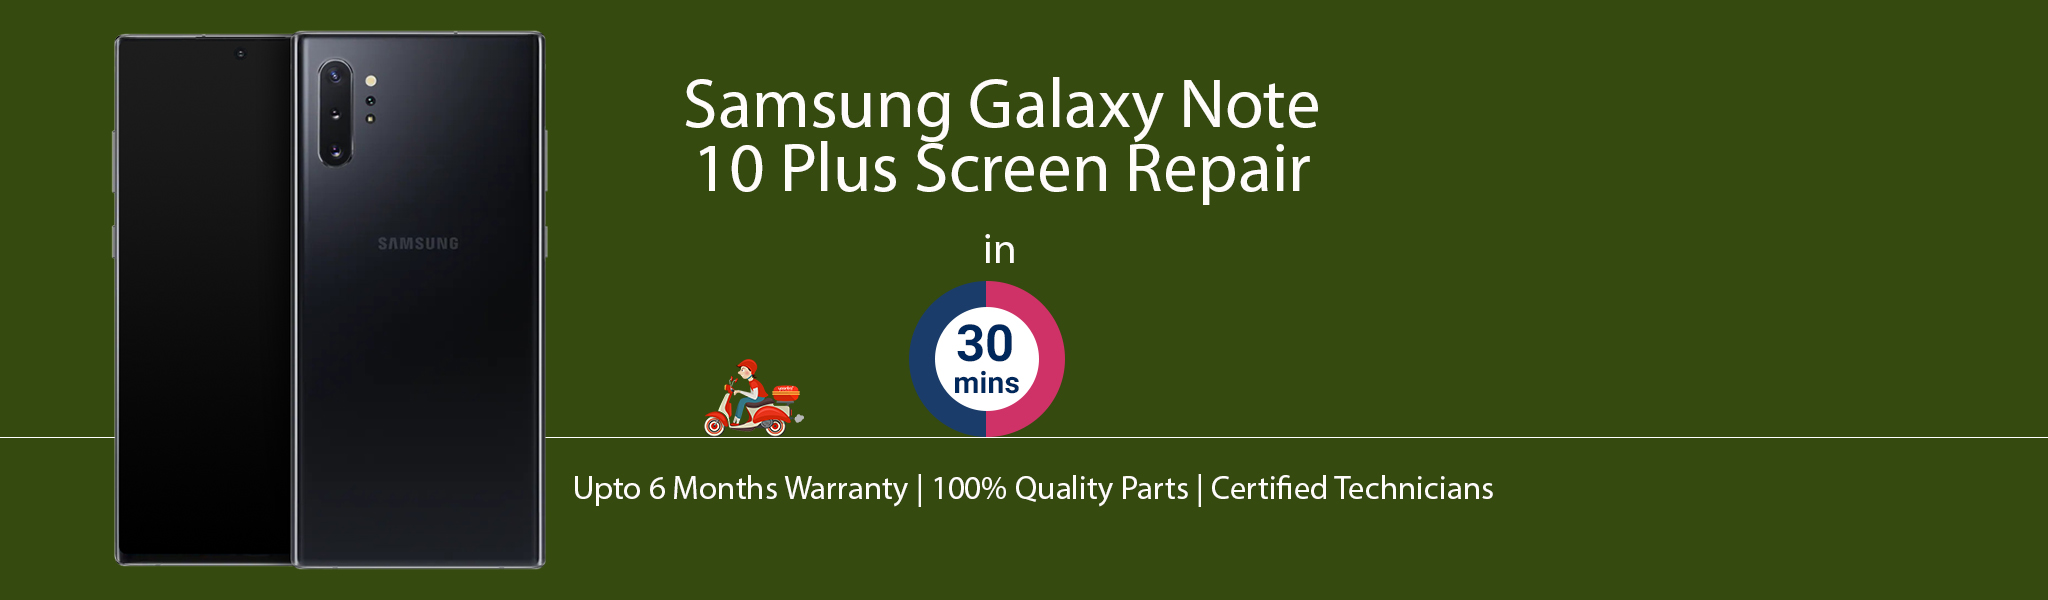 samsung-galaxy-note-10-plus-screen-repair.jpg